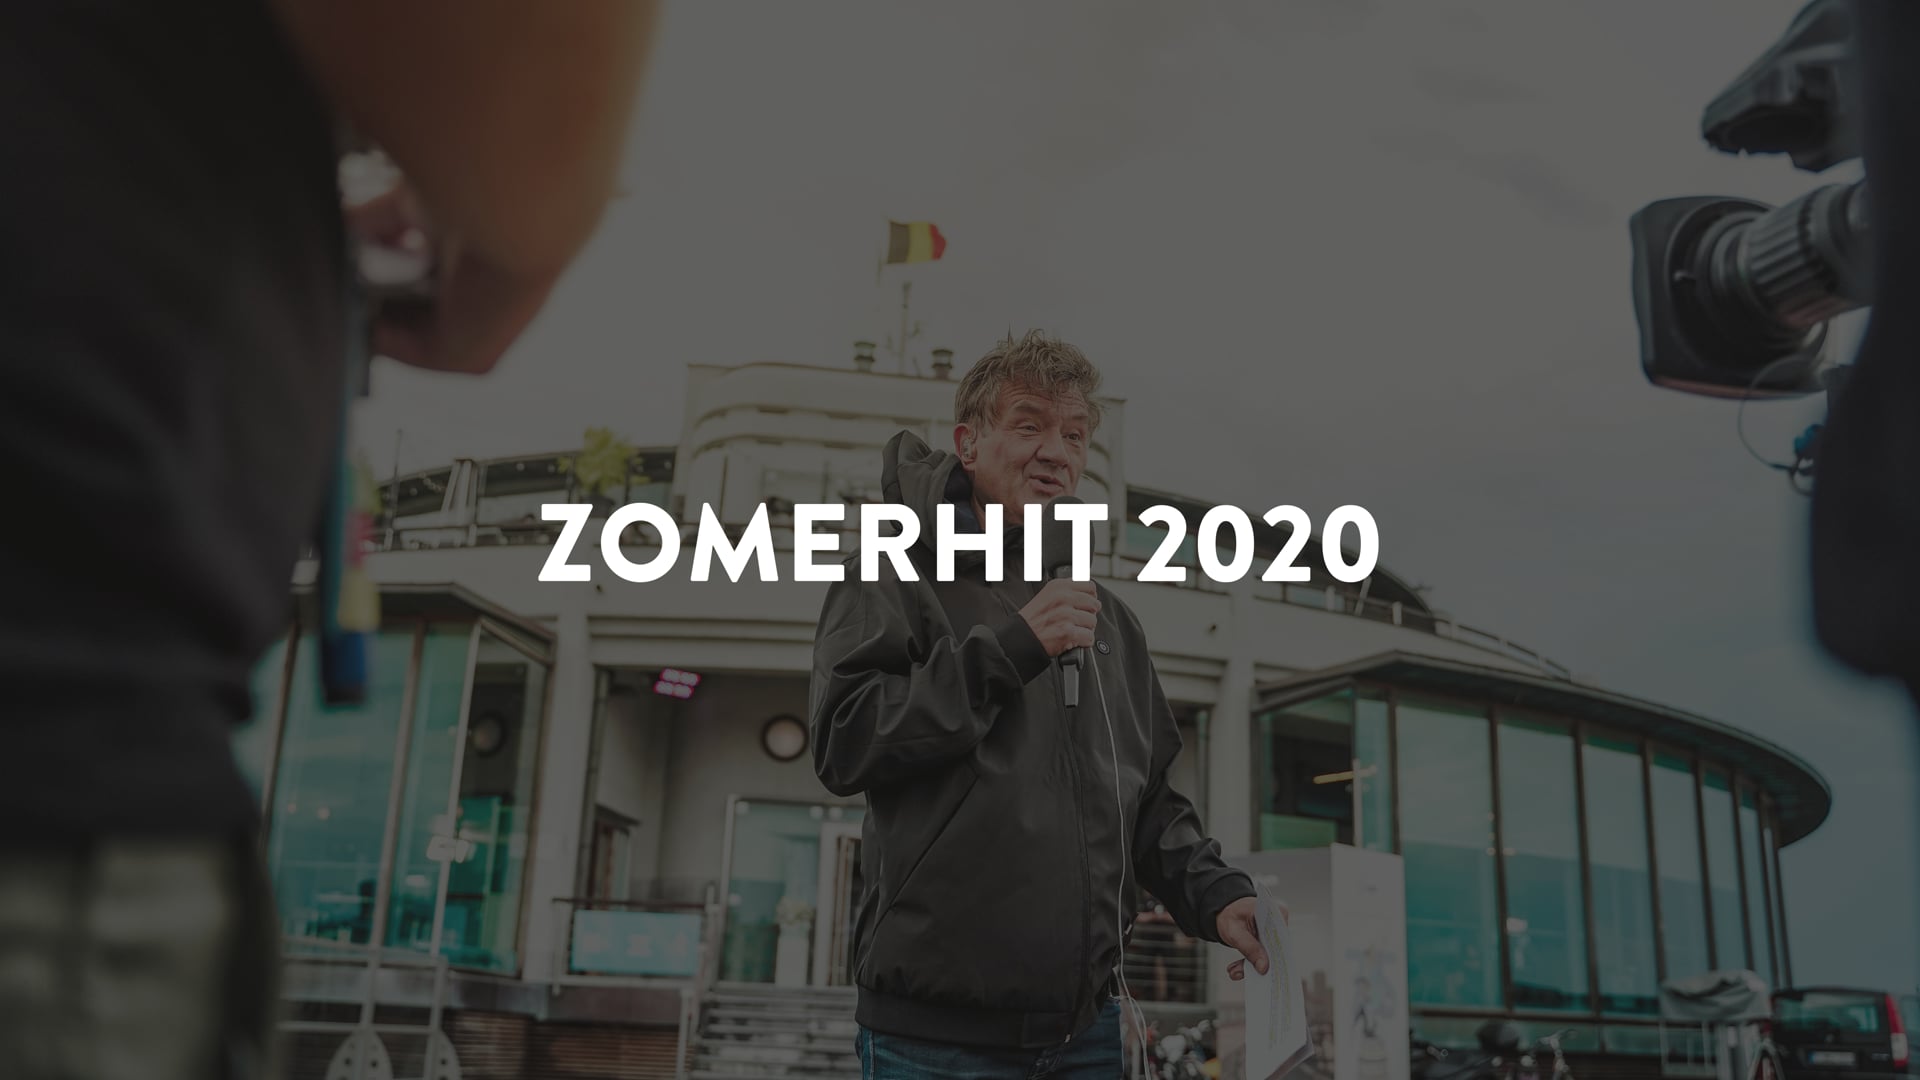 Radio 2 - Zomerhit 2020